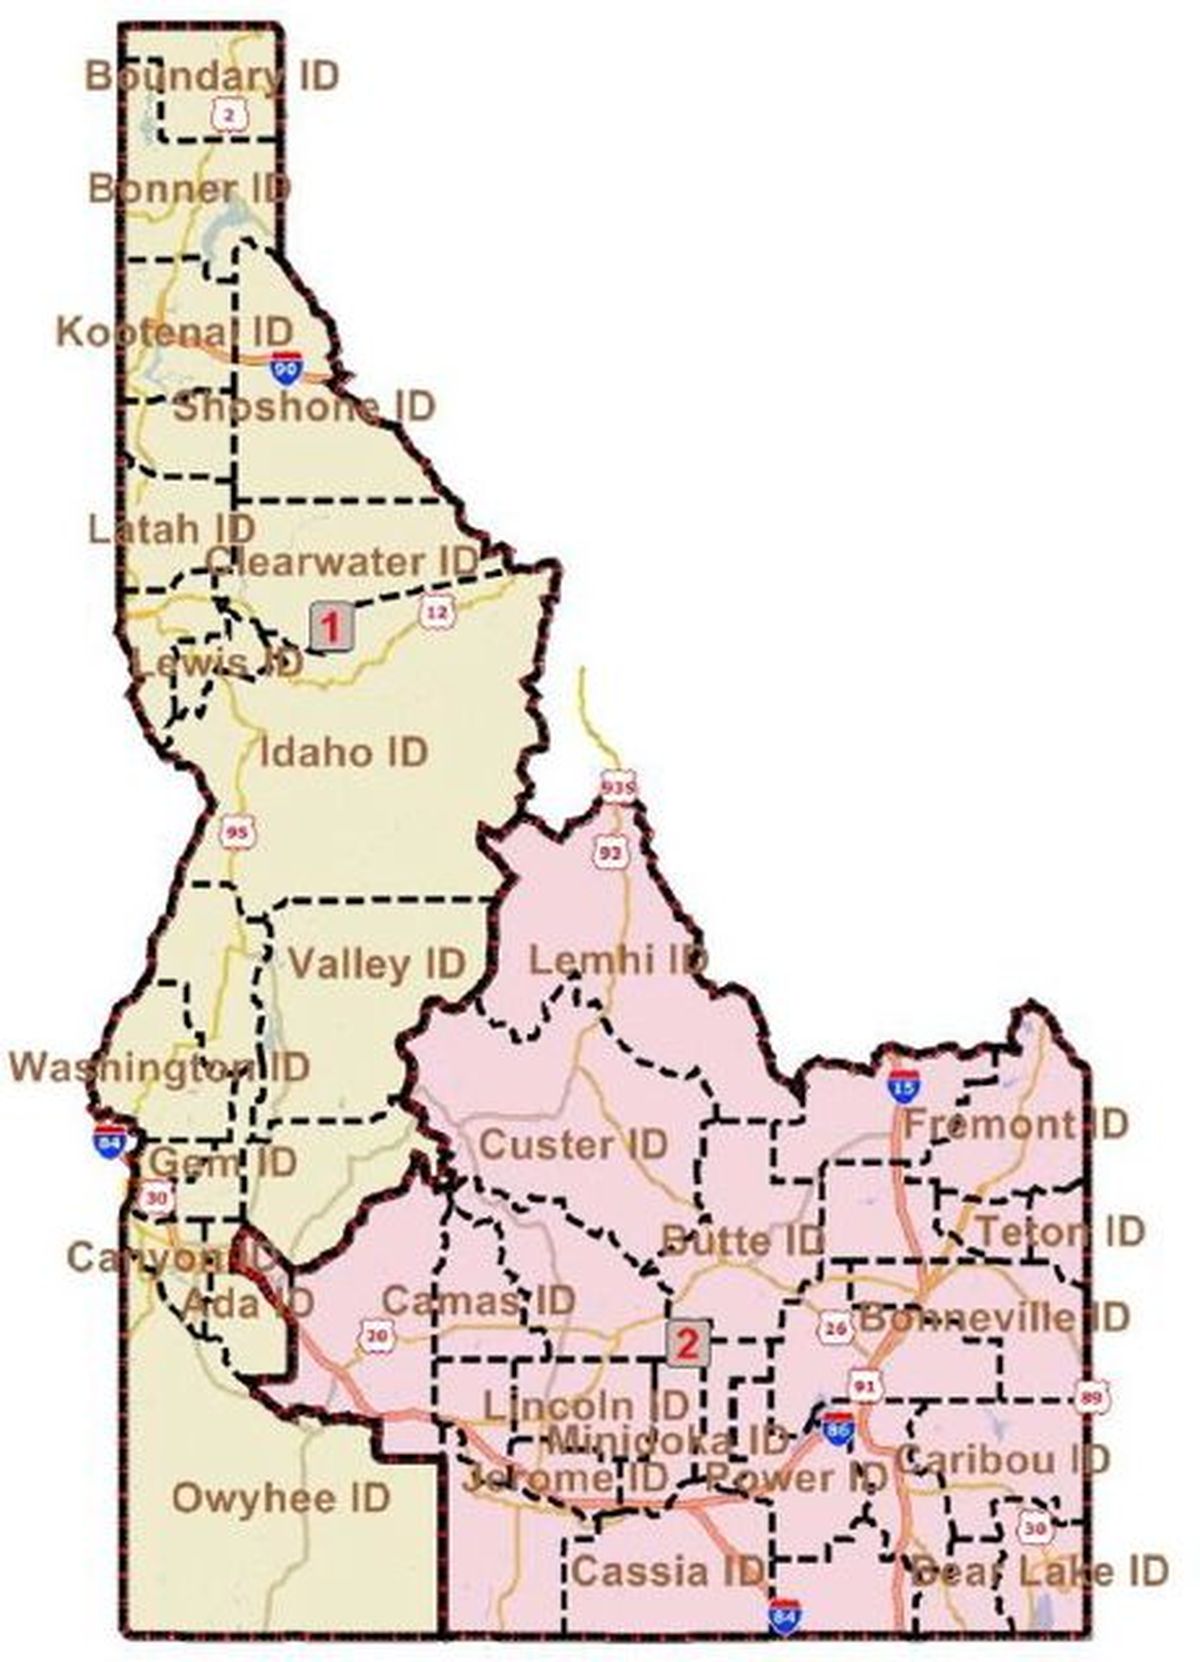 Idaho adopts new congressional districts, will still split Ada County